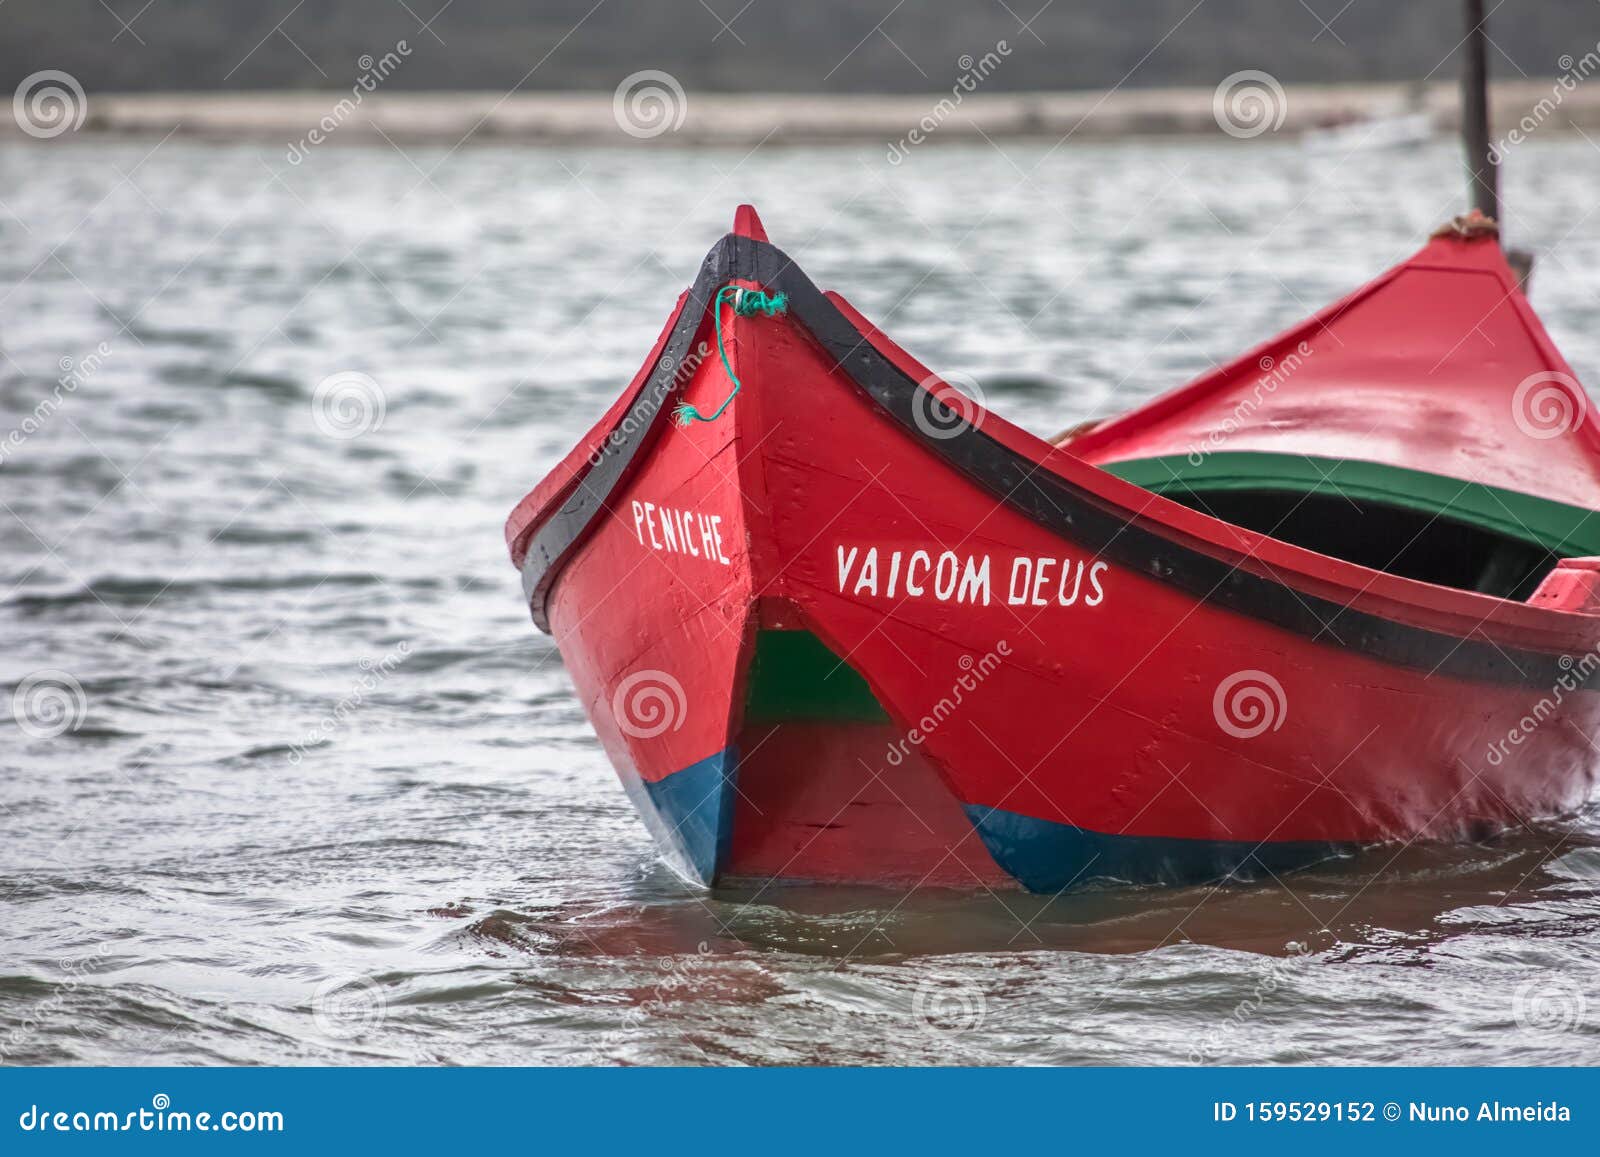 arte xávega - barcos de pesca tradicionais portugueses with images boat, working boat